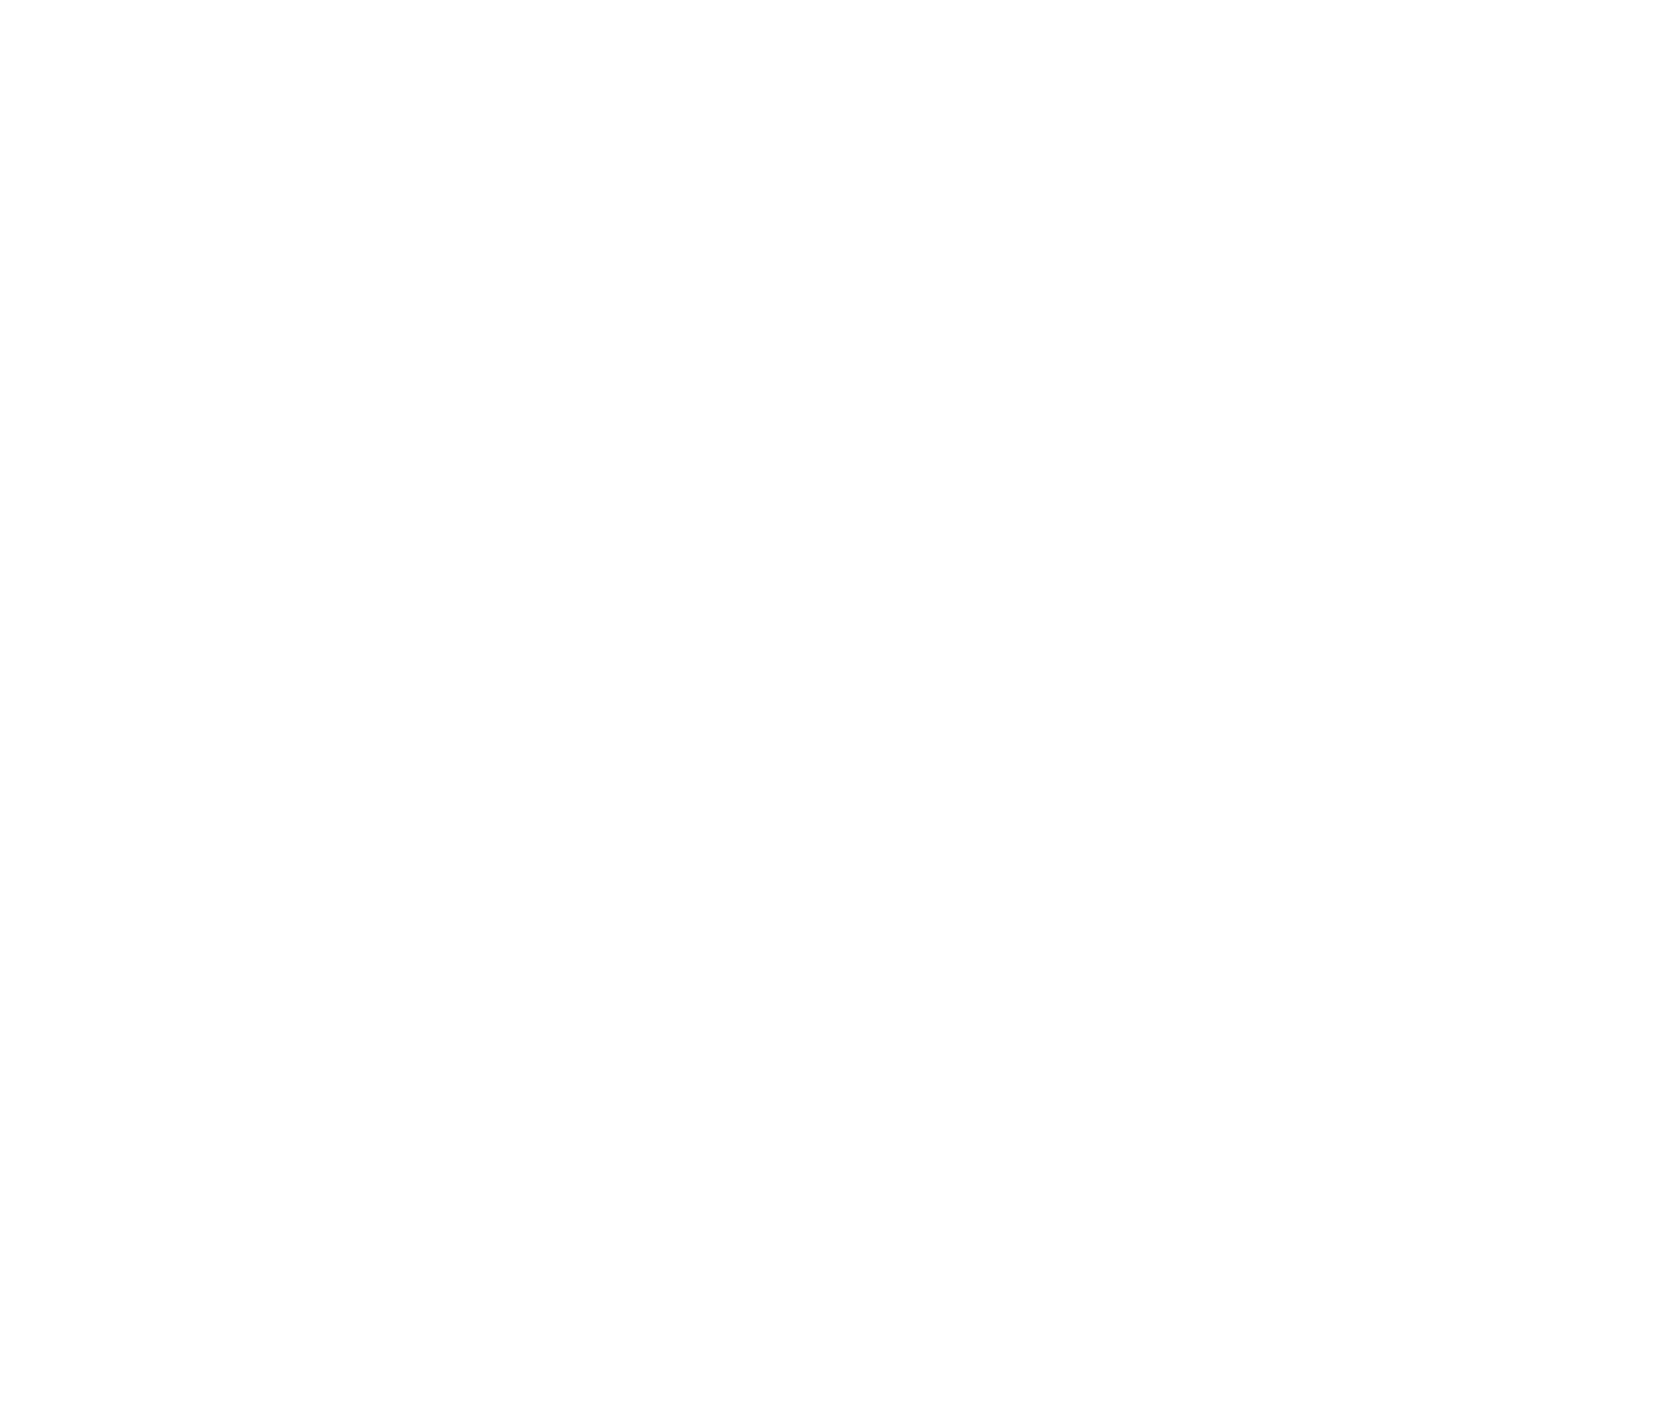 VTEX logo pour fonds sombres (PNG transparent)